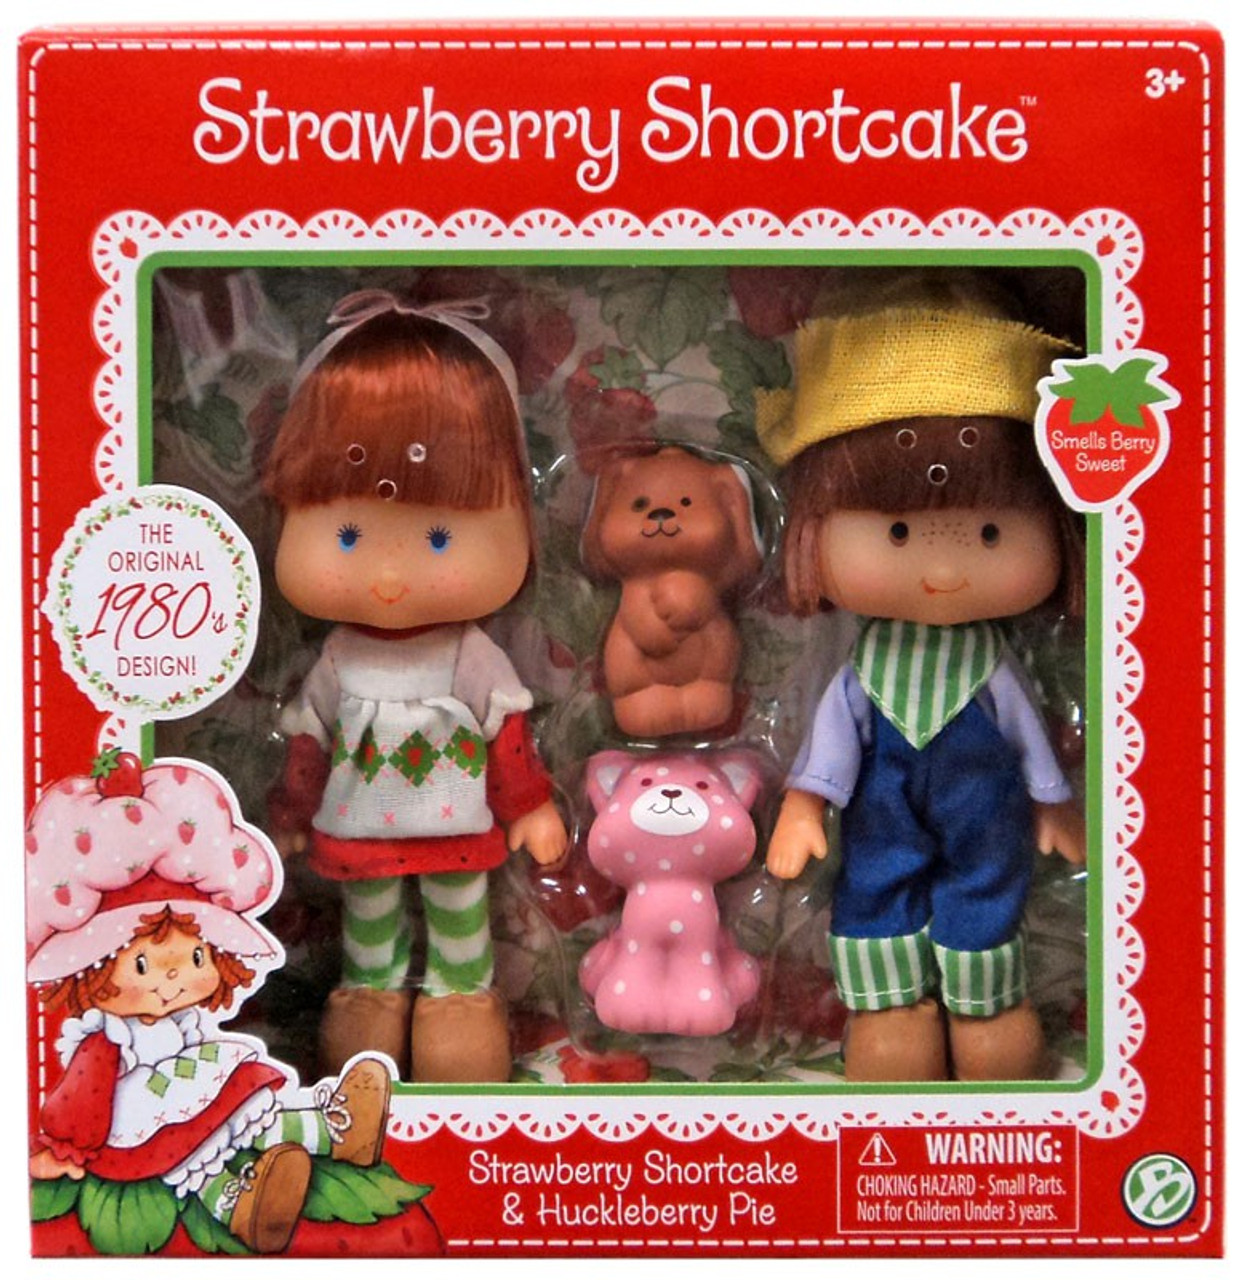 strawberry shortcake classic doll set